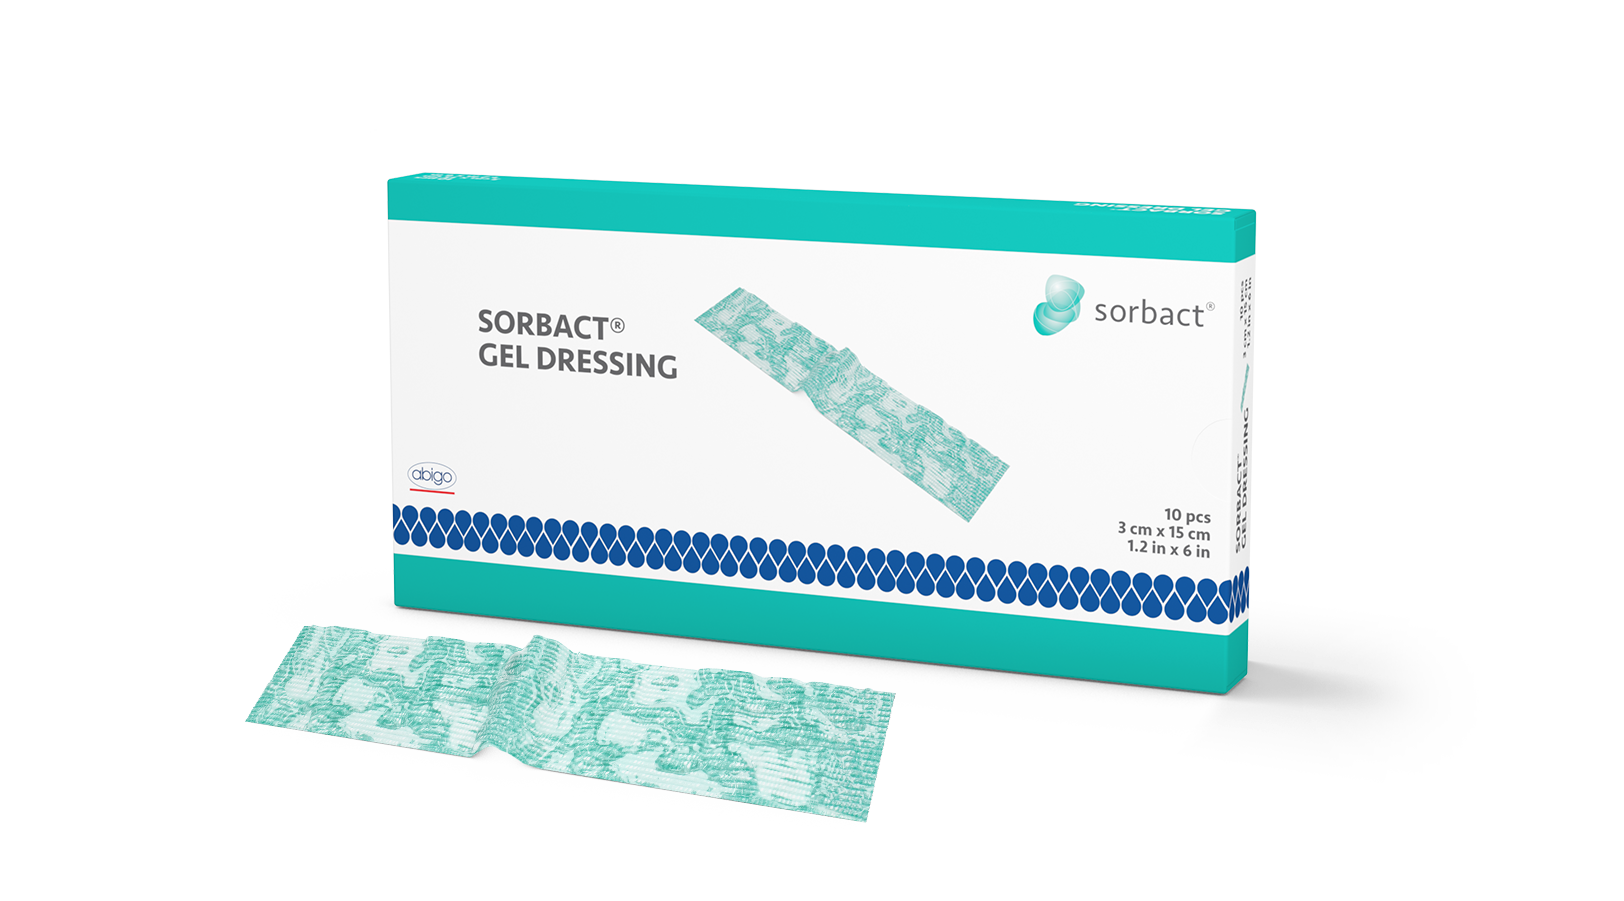 sorbact-gel-dressing-1624x901-2020